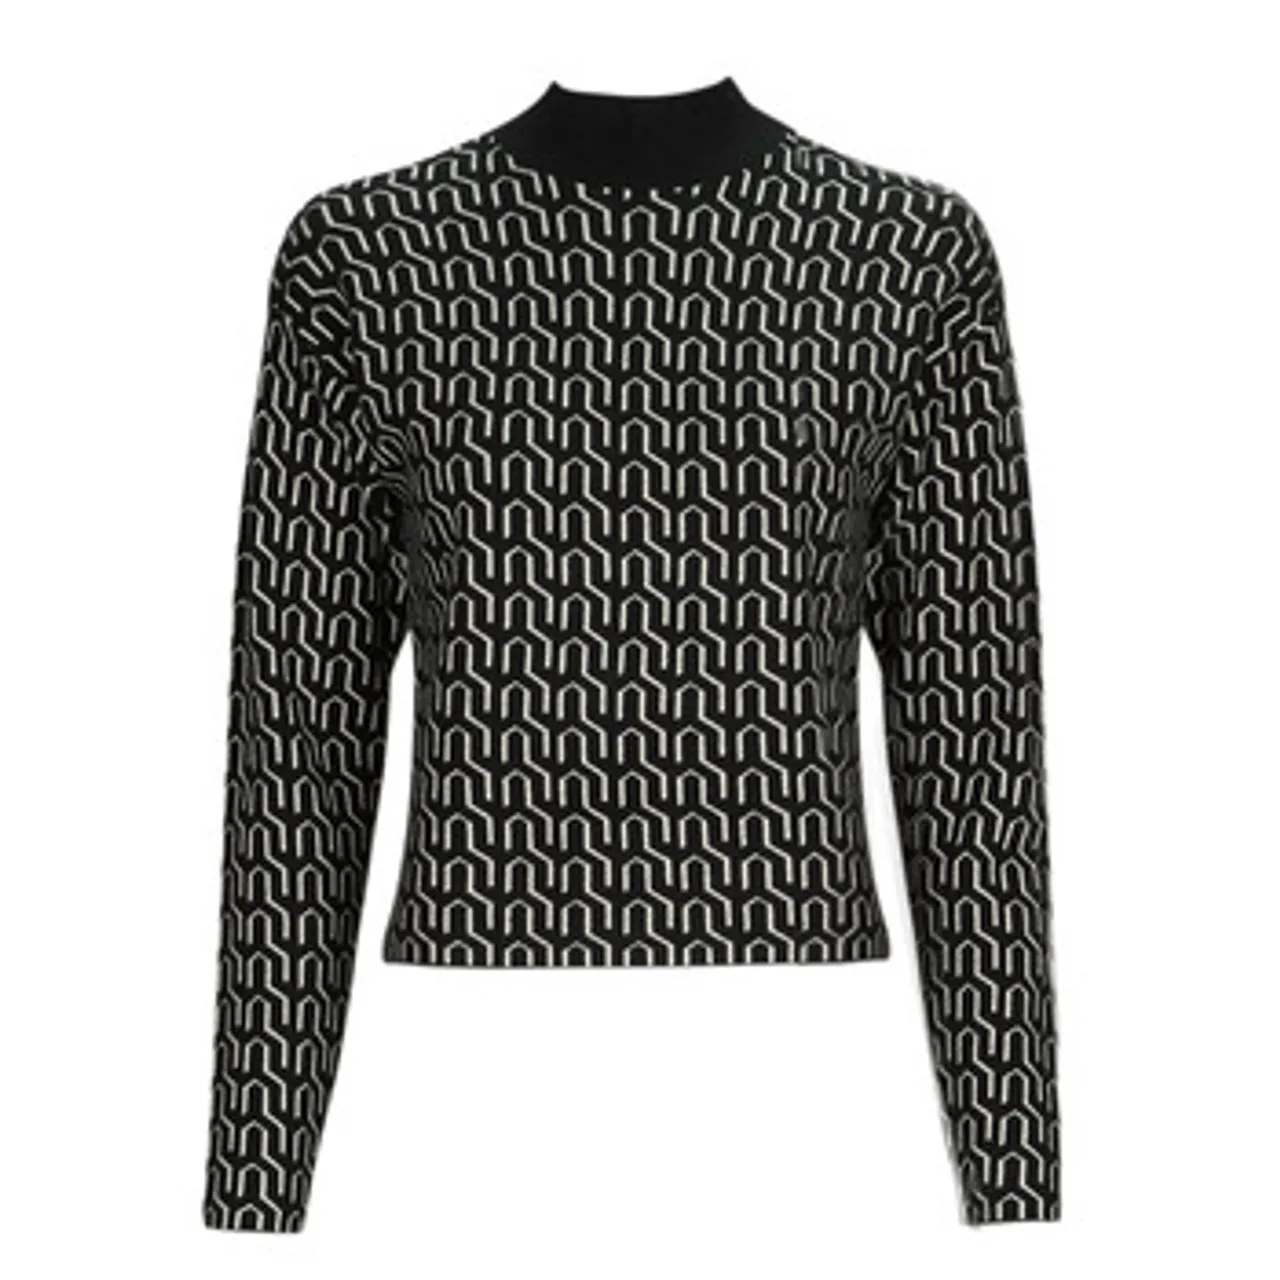 Vero Moda  VMGOLDNEEDLE ART LS HIGHNK PULL LCS  women's Sweater in Black